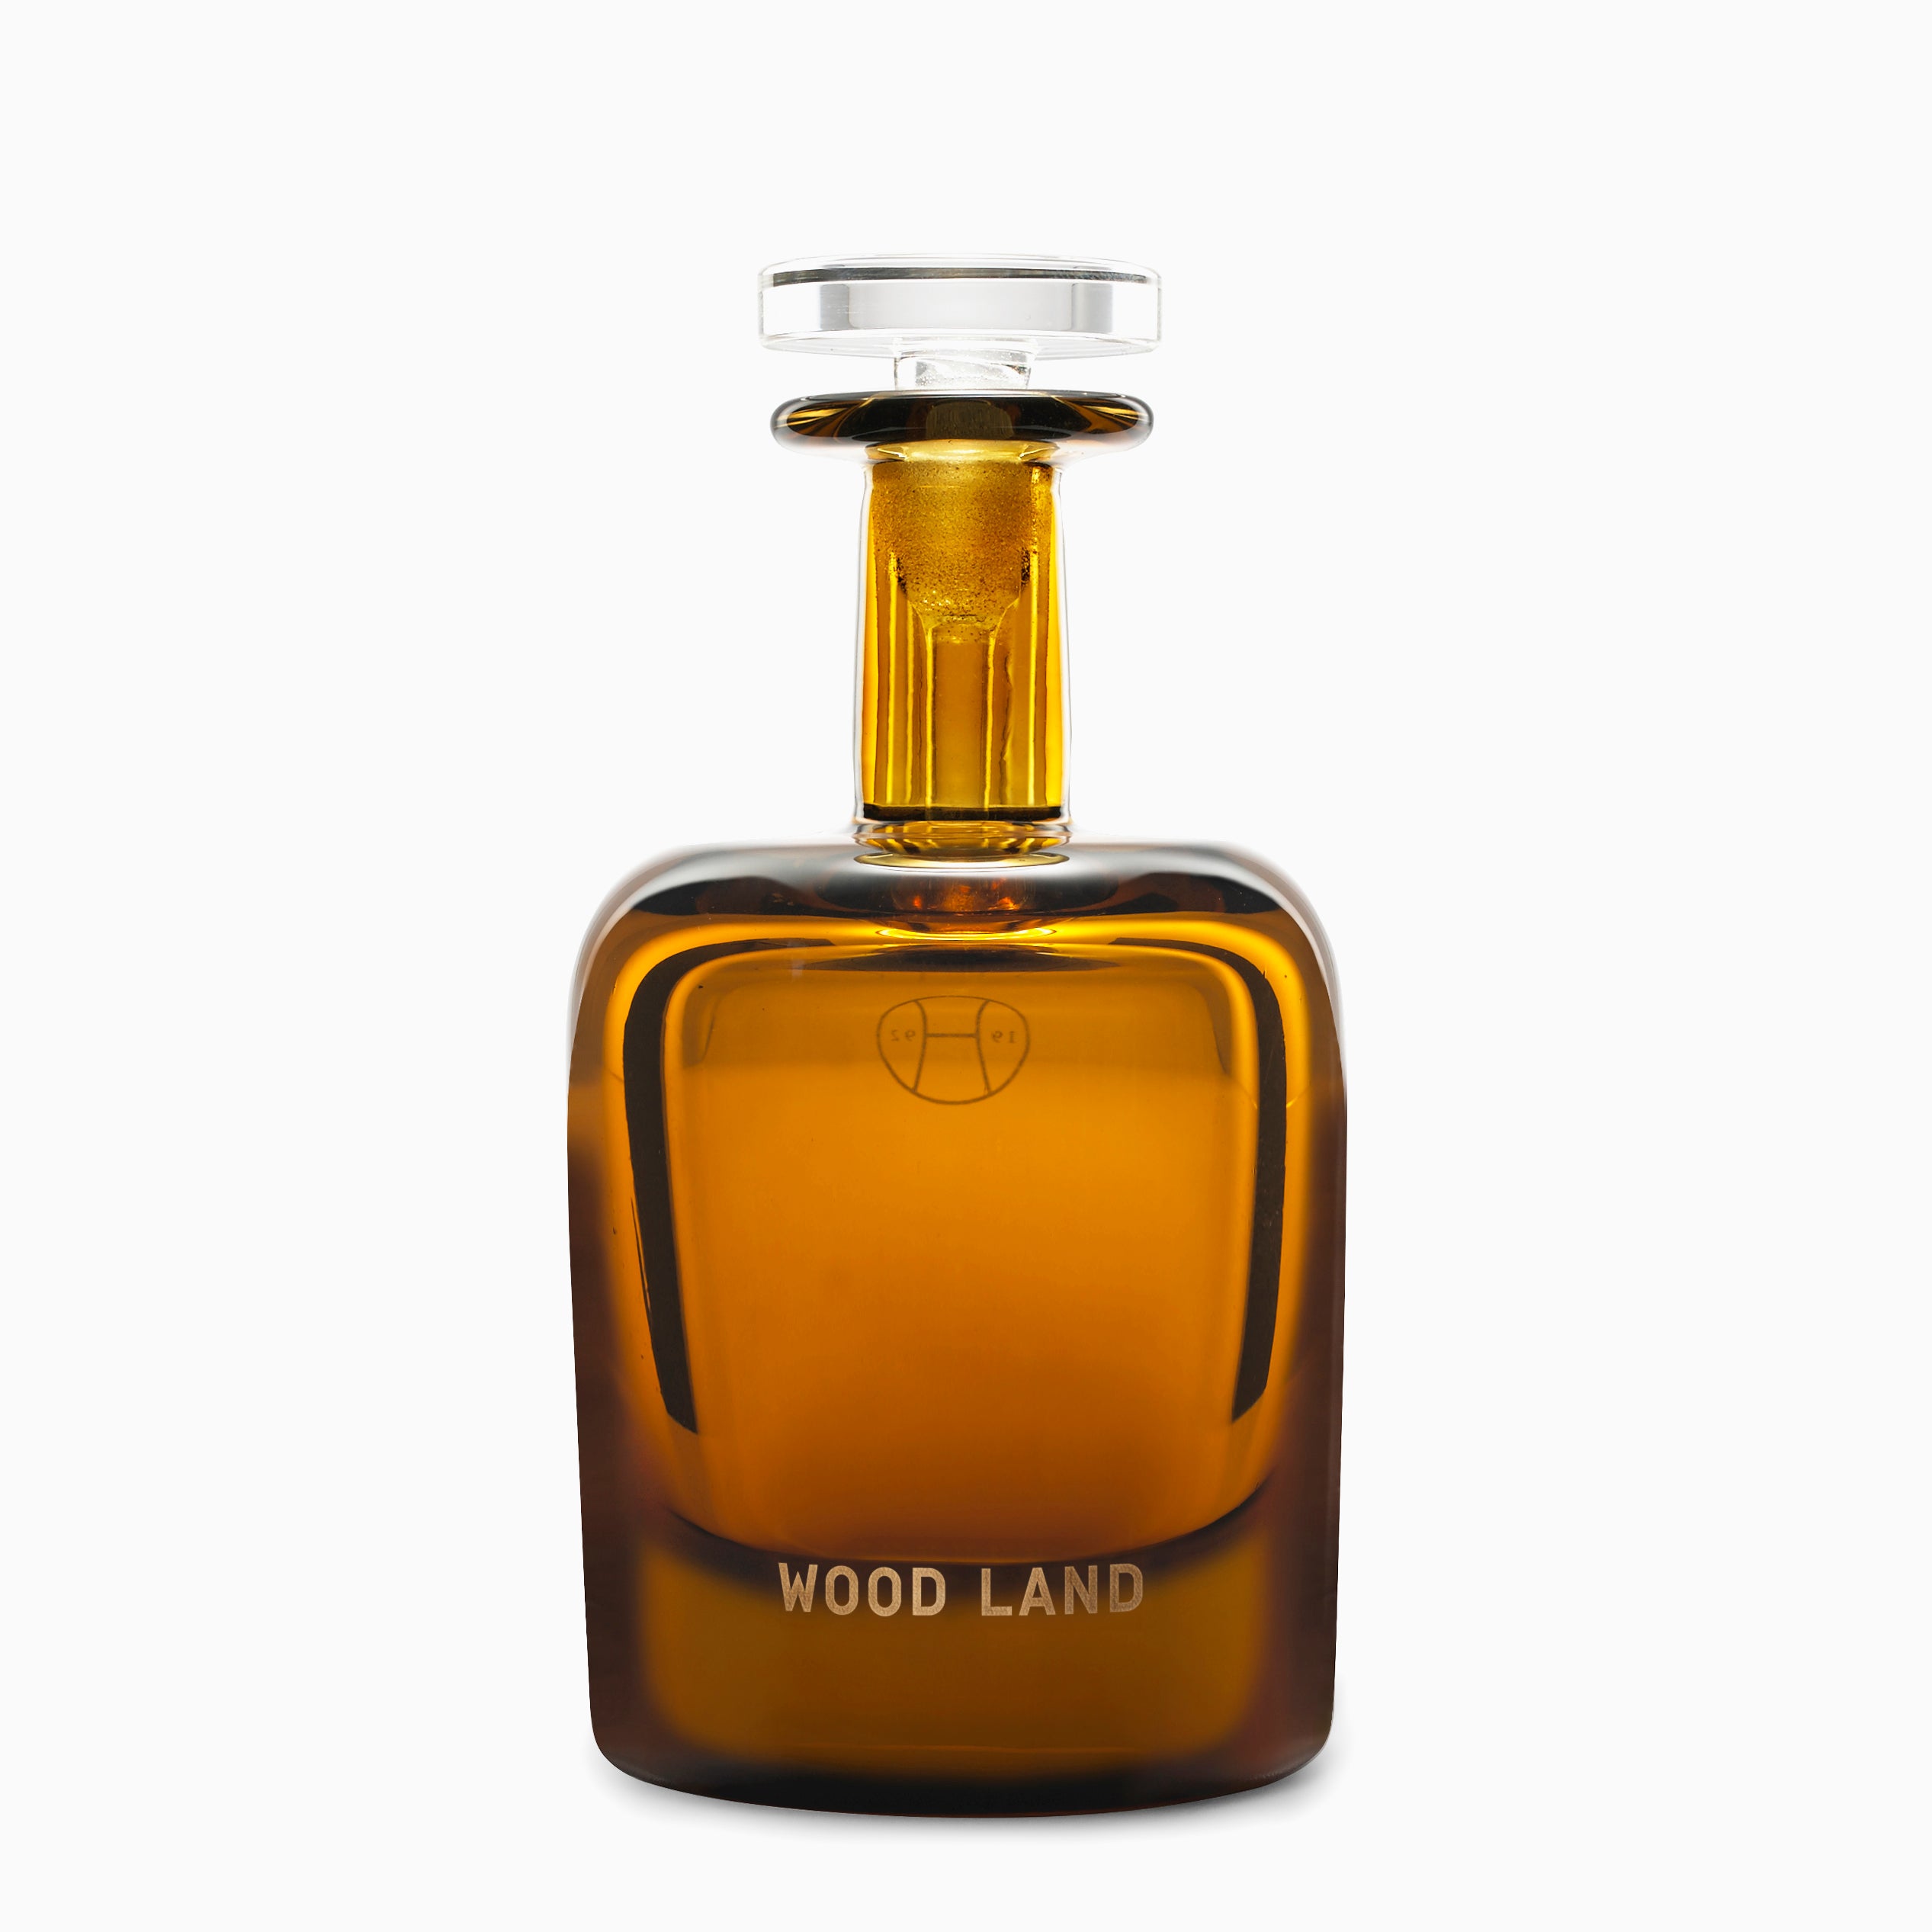 Wood Land – Perfumer H